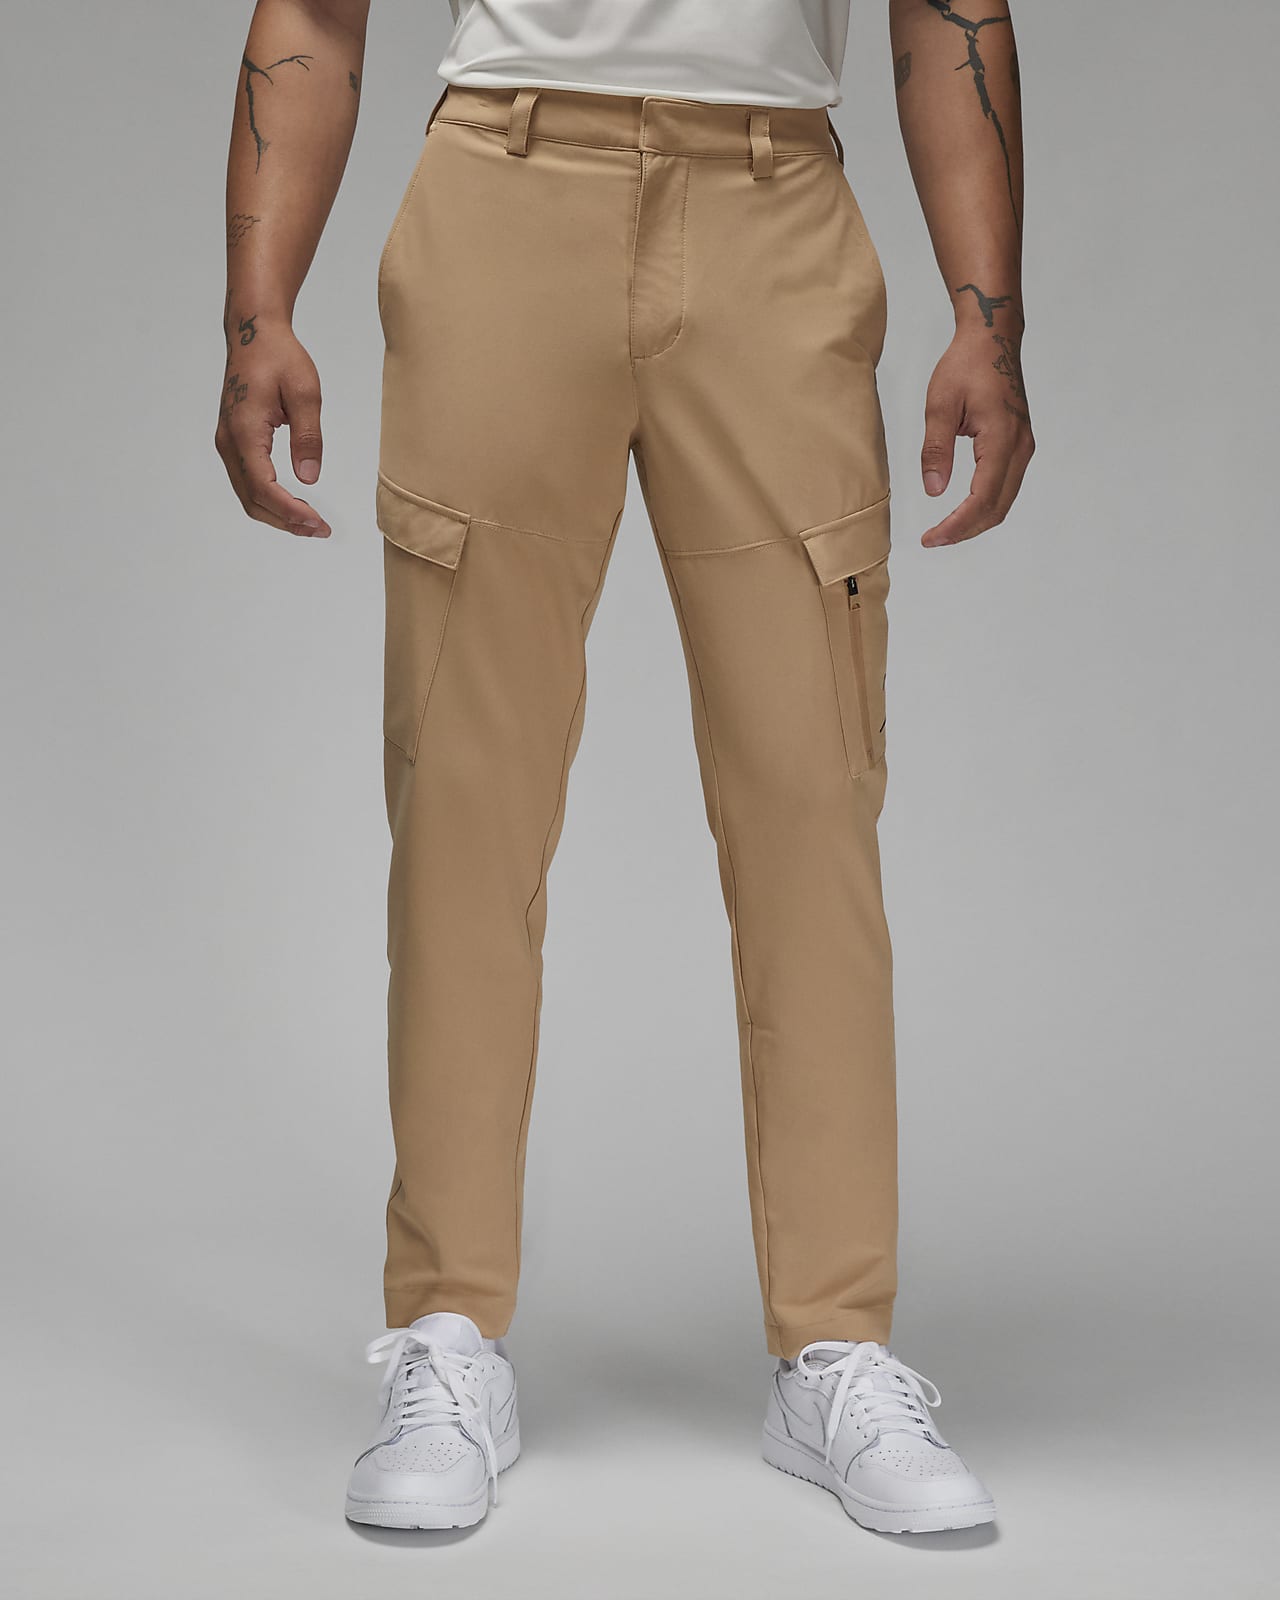 Jordan Golf Men's Pants